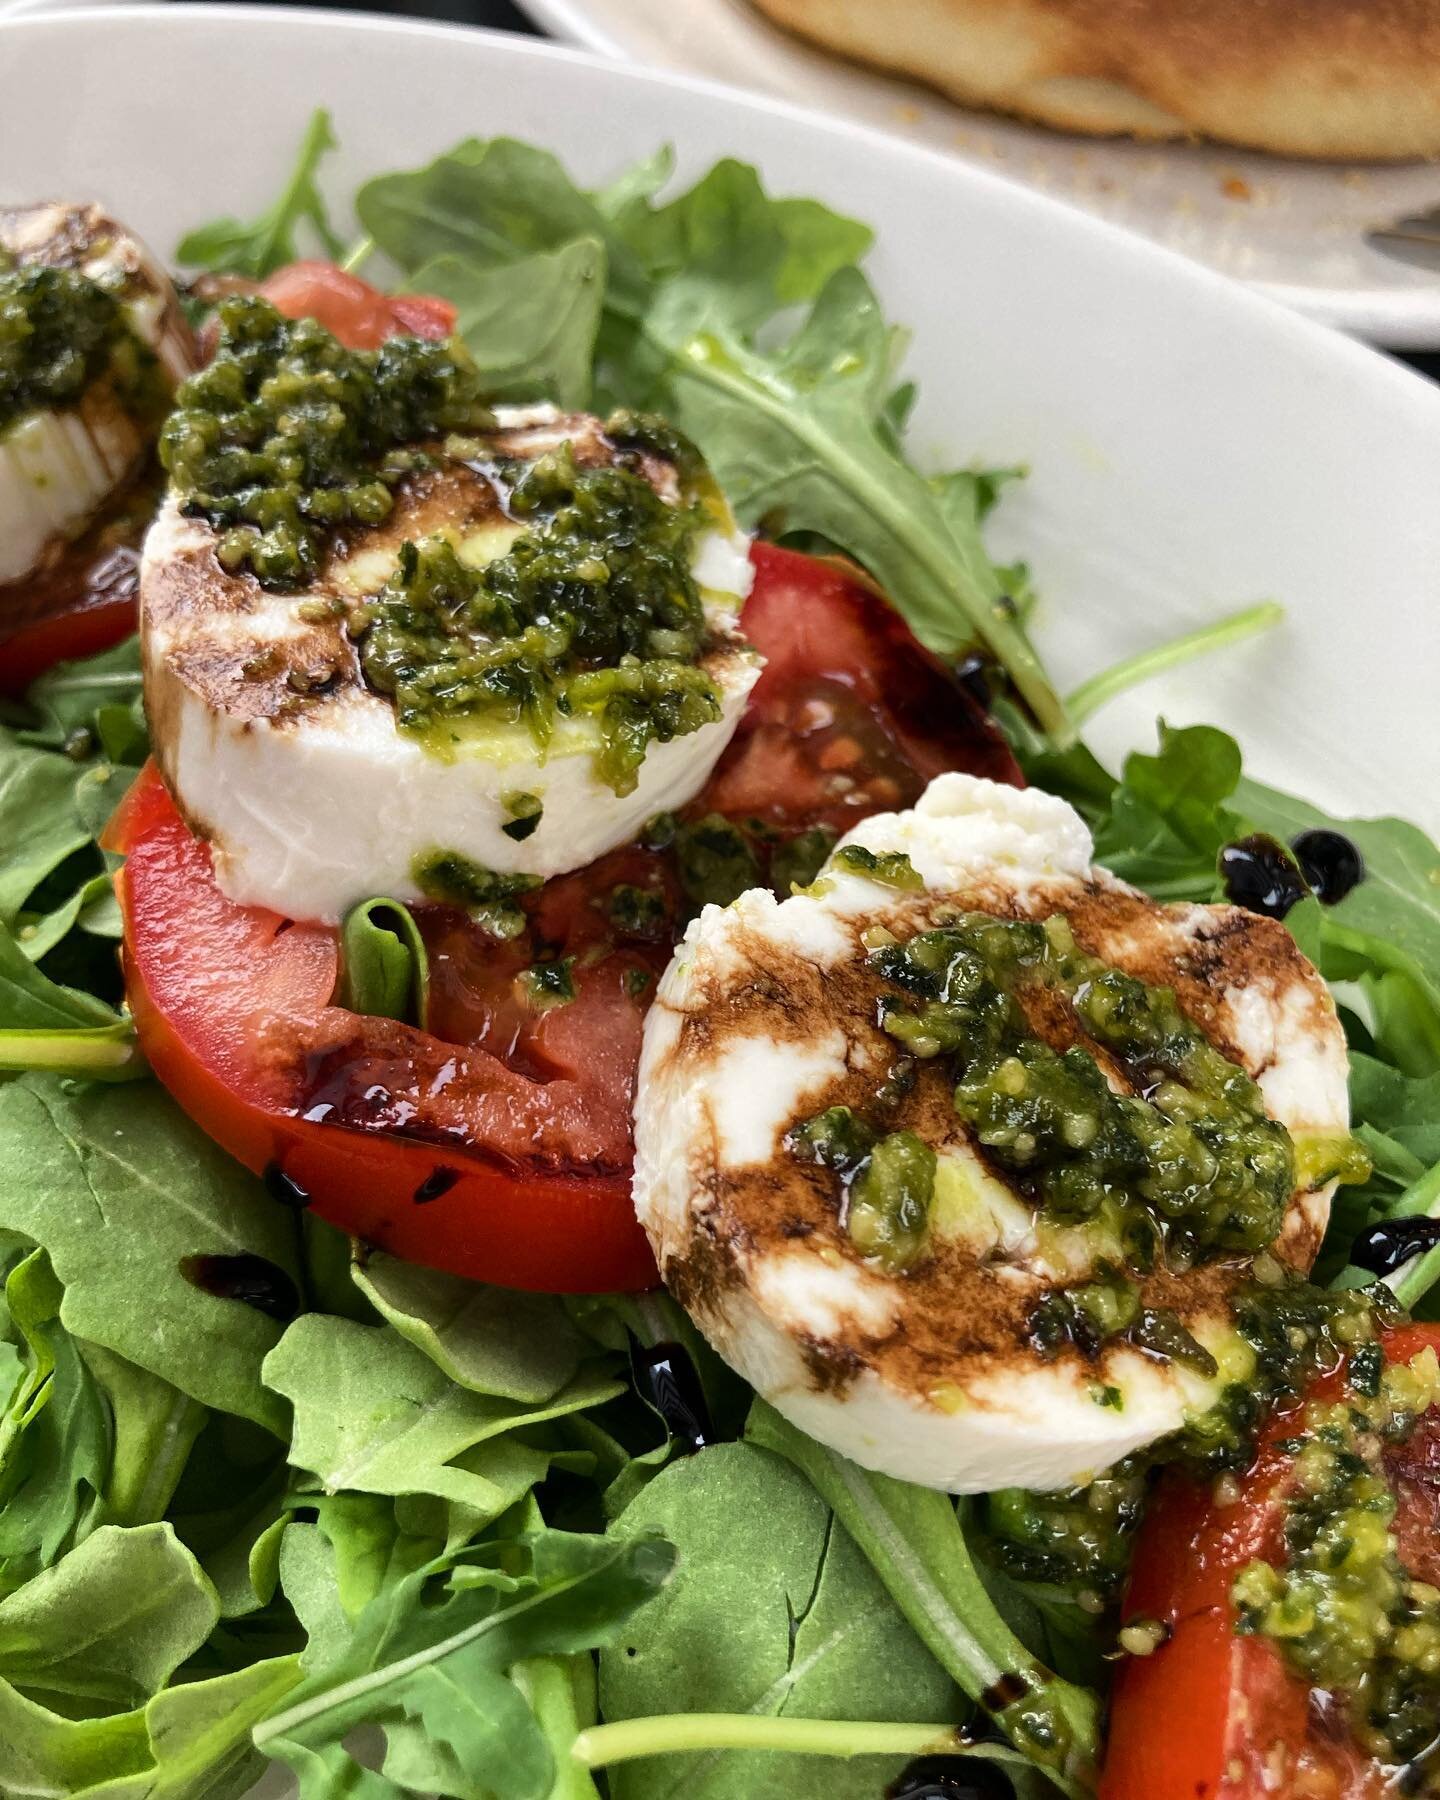 🥗🥗🥗
A caprese salad is always a good idea. 

📍Larimer Square, Denver, Colorado 

.
.
.
.
.
.
.

#travel #food #foodporn #foodie #foodphotography #caprese #capresesalad #burratagram #salad #italianfood #healthyeating #travelphotography #travelblog